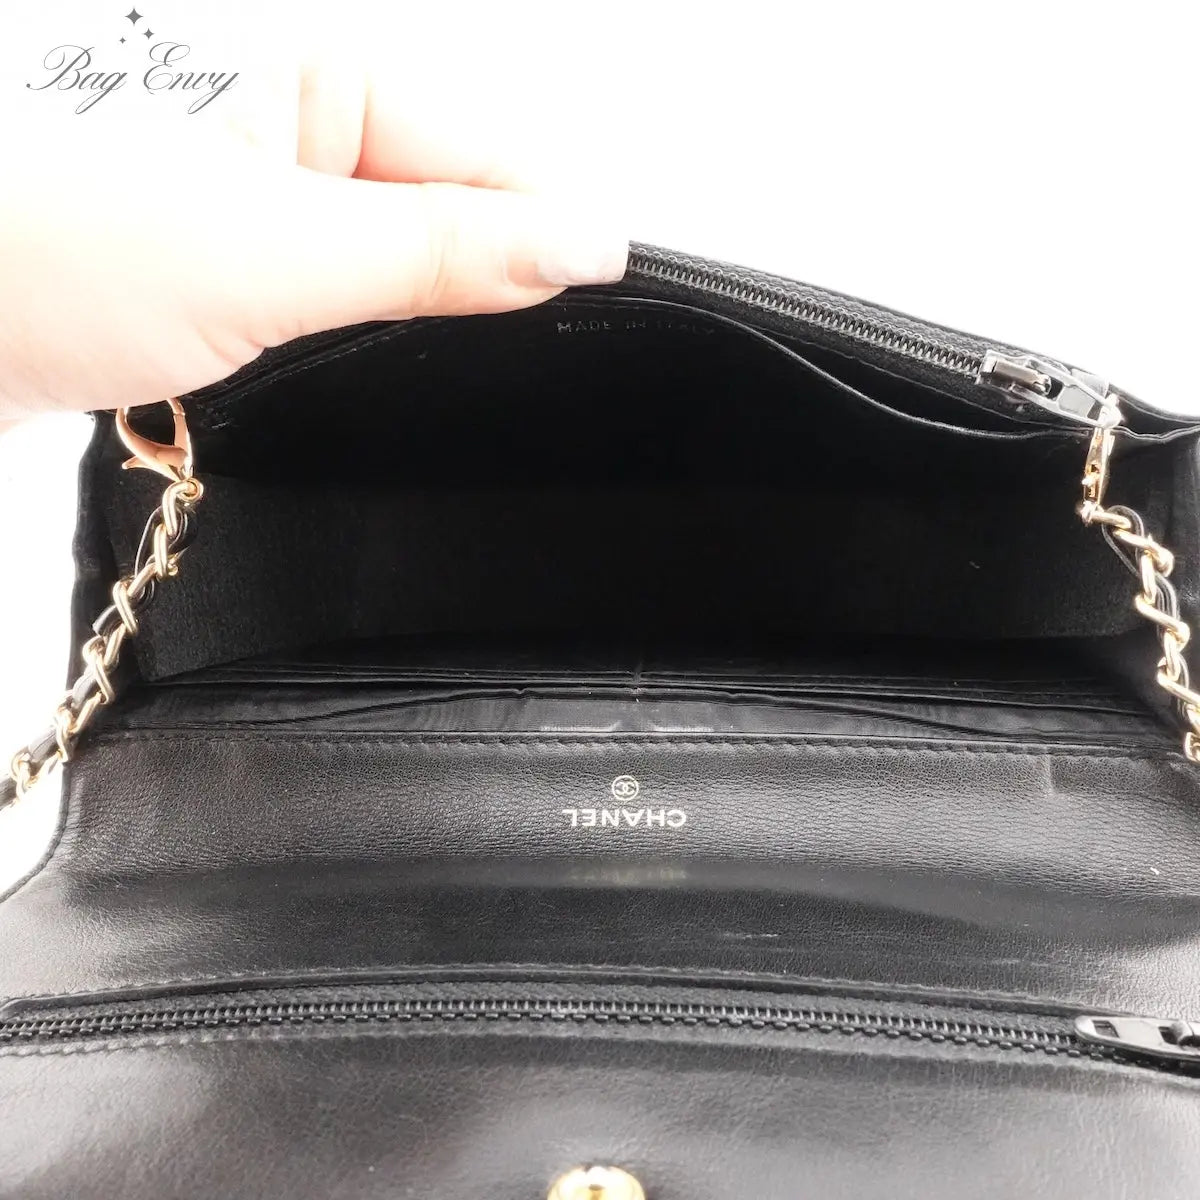 CHANEL Caviar Timeless Clutch on Chain - Bag Envy